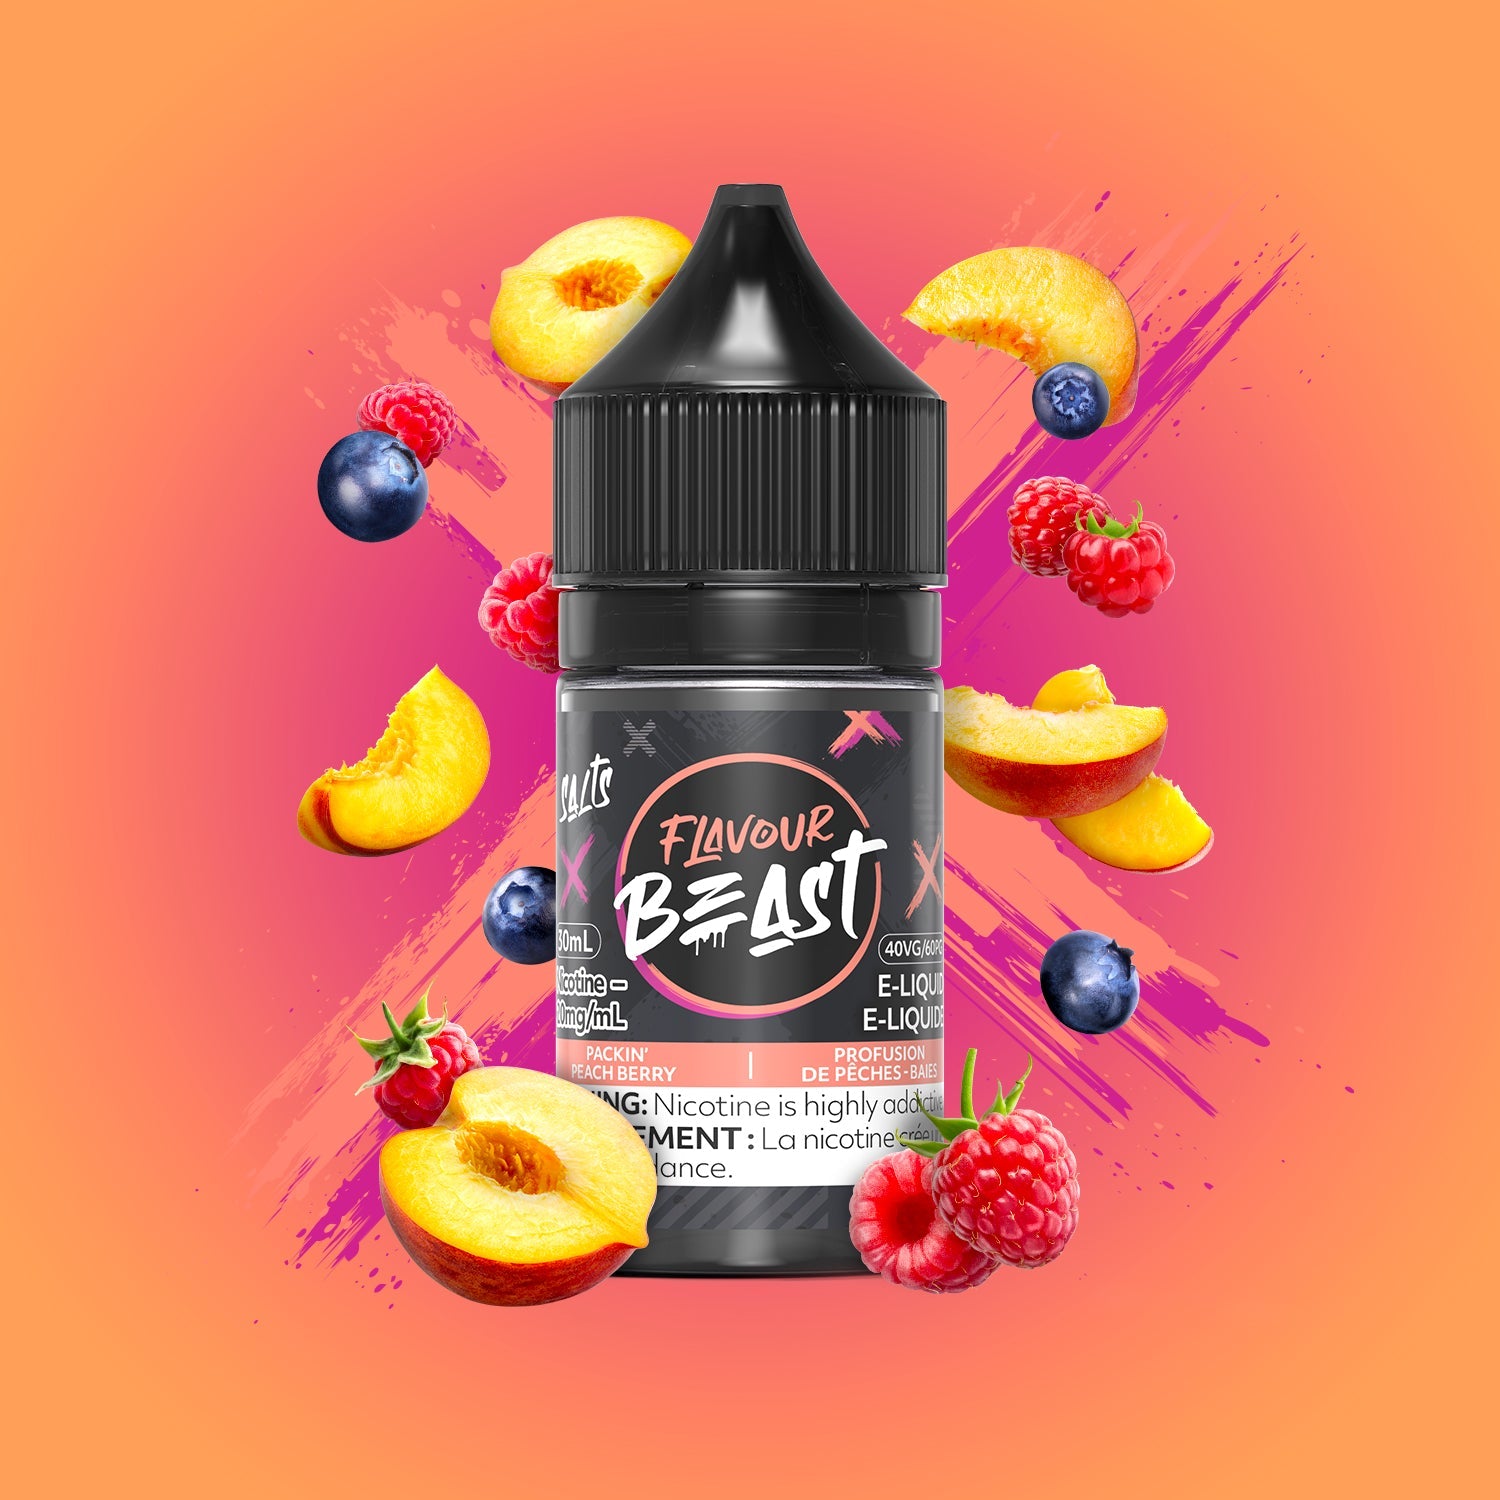 Flavour Beast Salt - Packin Peach Berry (EXCISE TAXED)